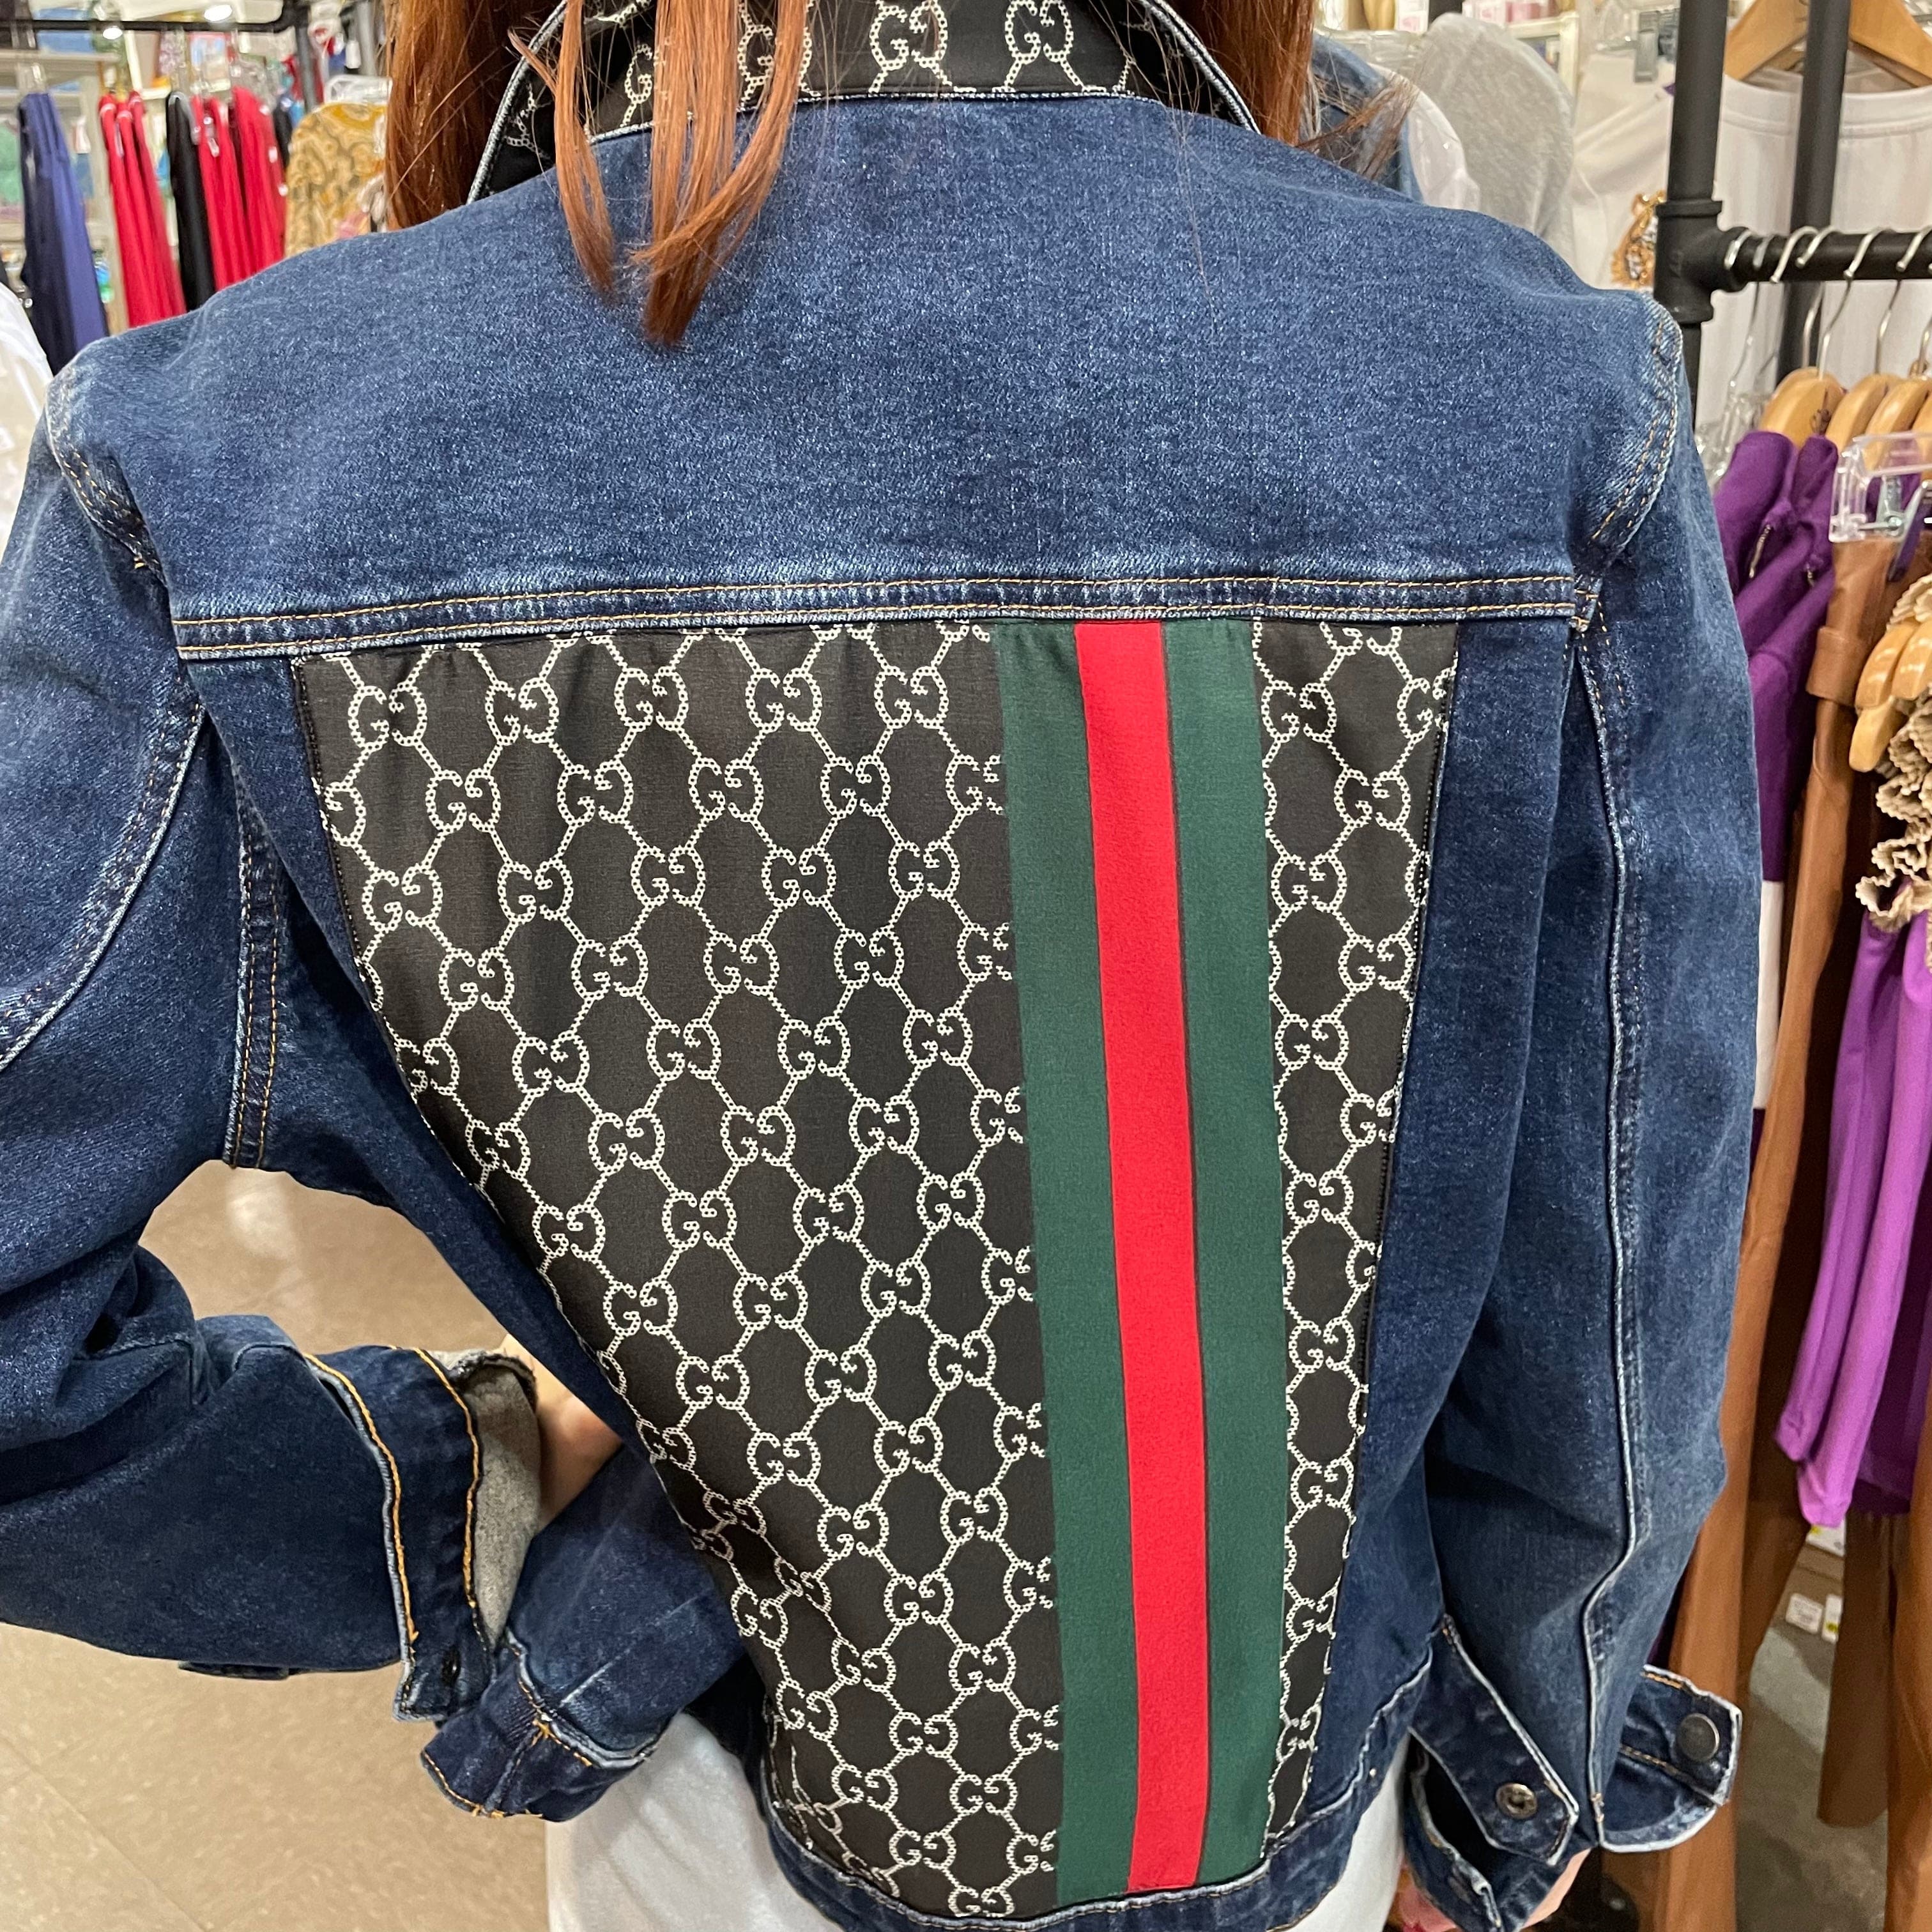 Gucci Monogram Scarf on Denim Jacket